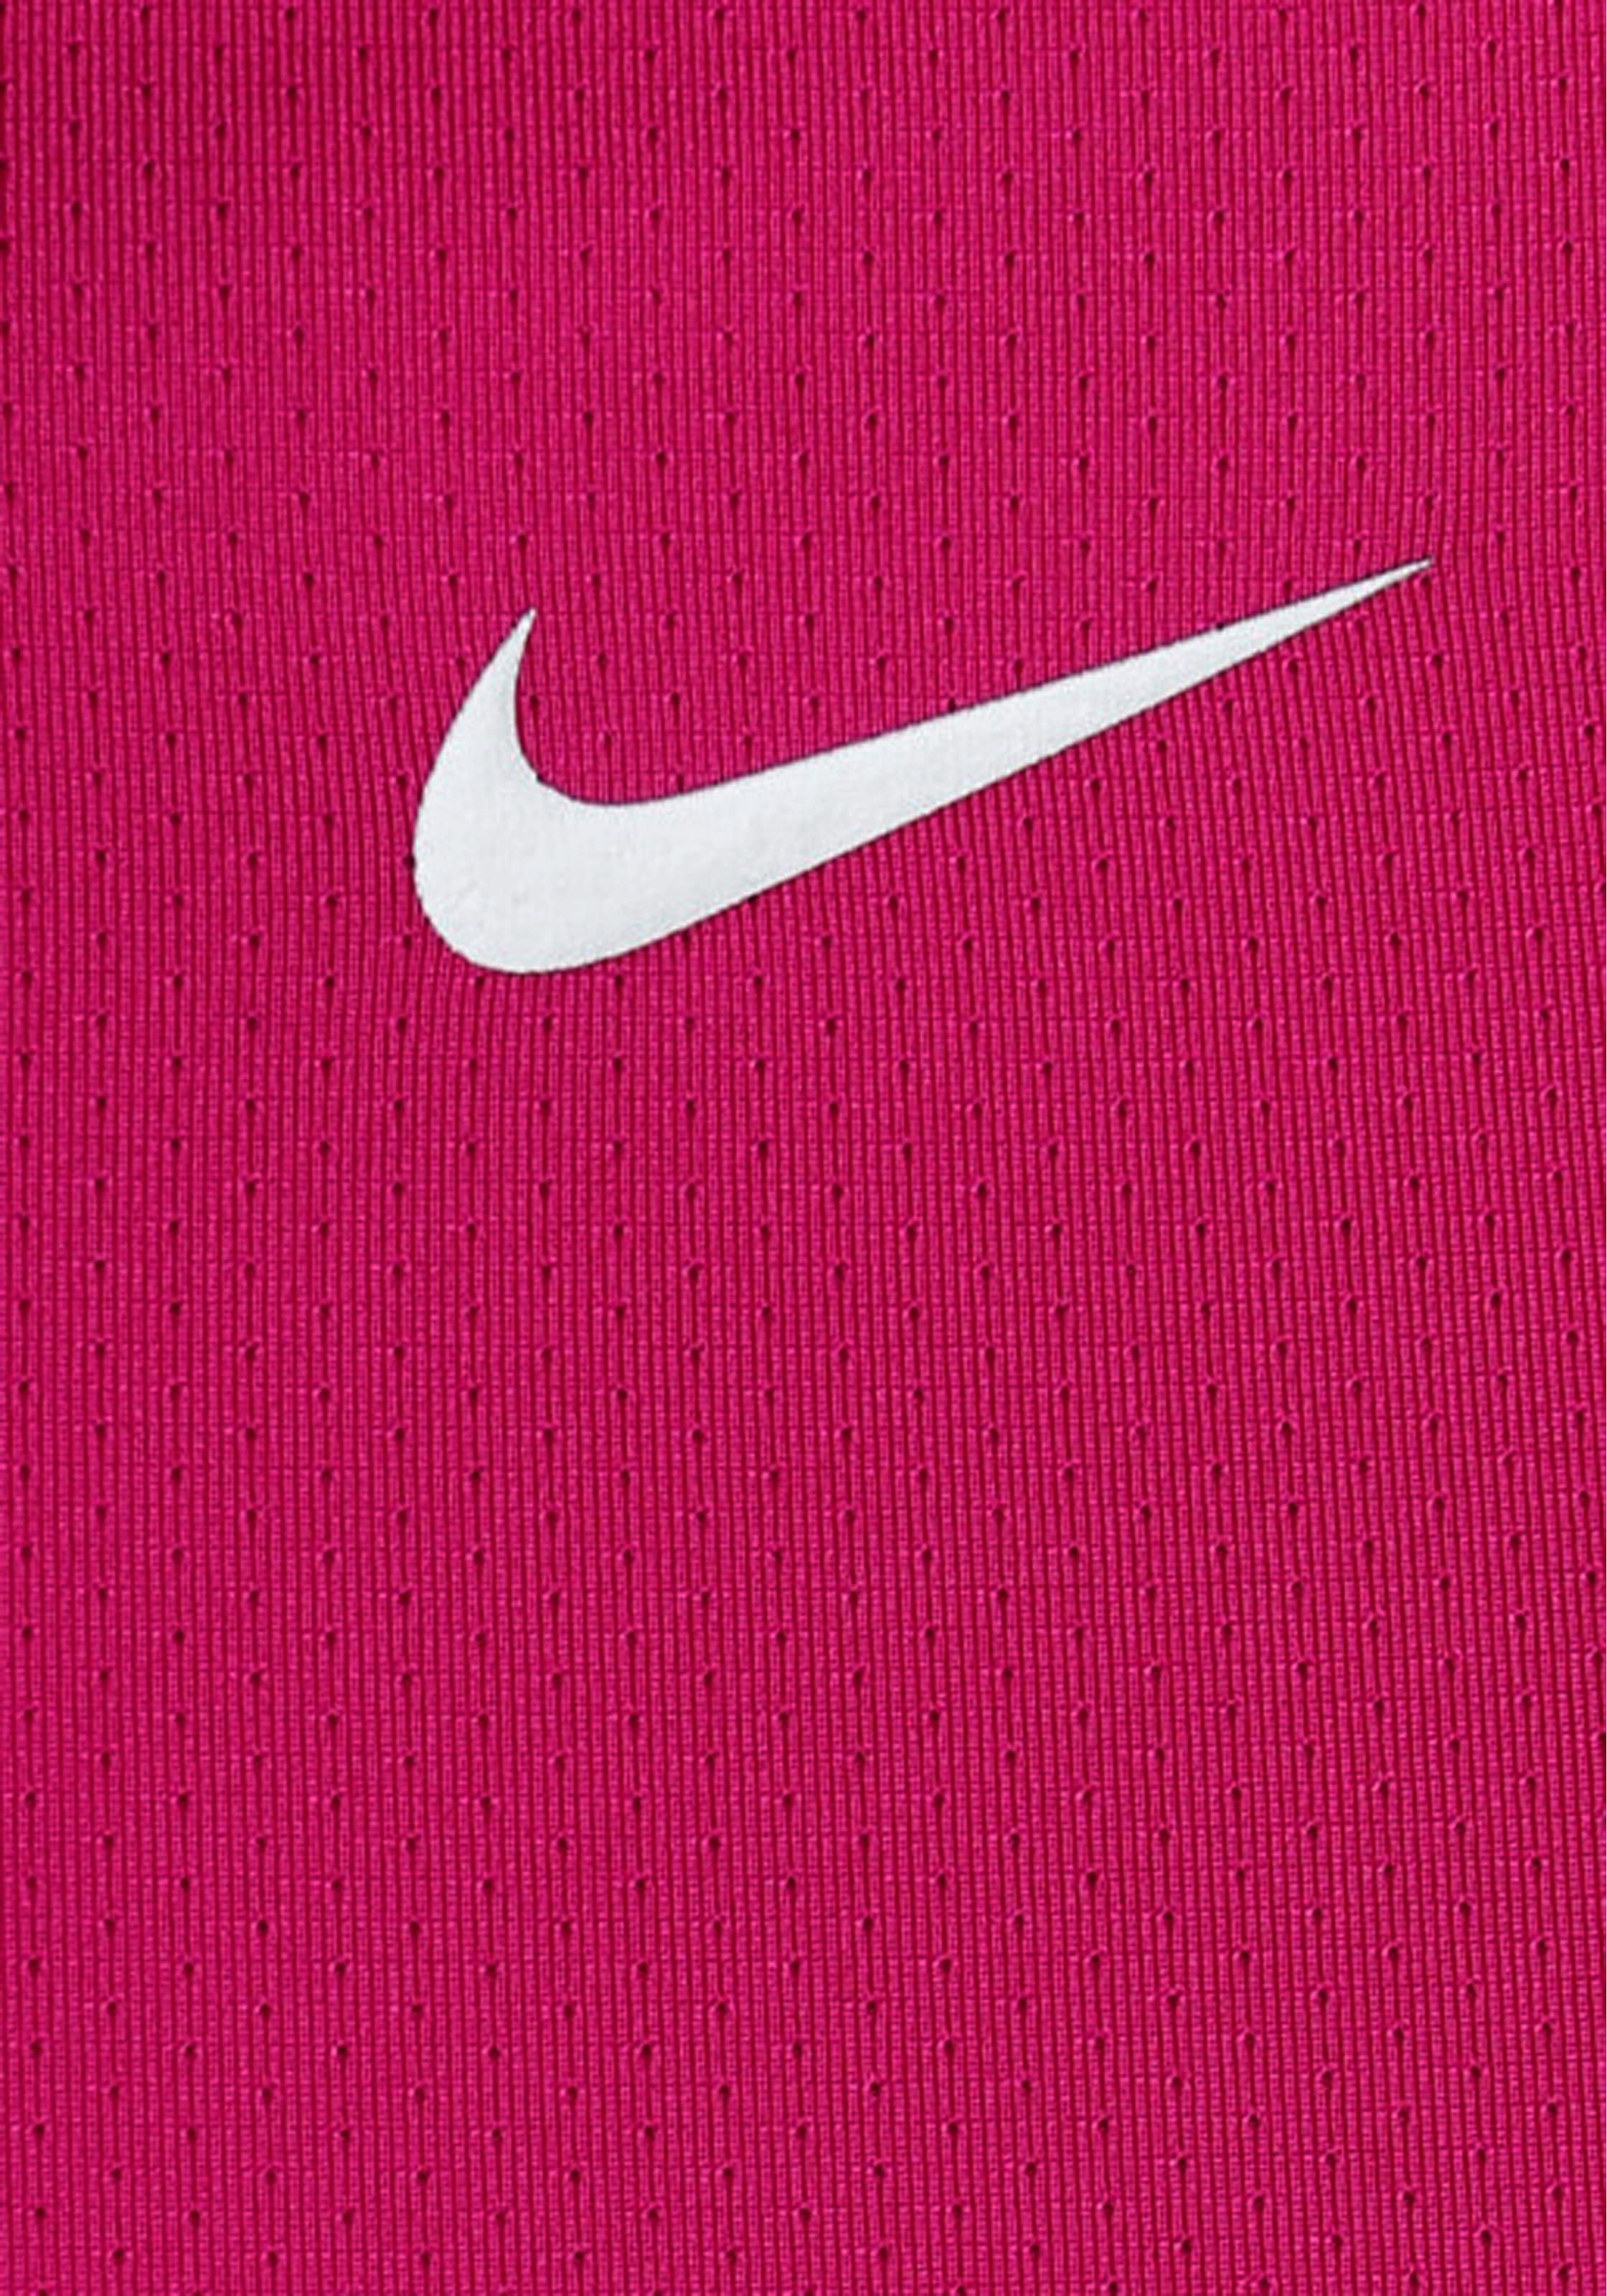 DRI-FIT TOP OVER »WOMEN NIKE Nike SHORTSLEEVE Technology MESH«, PERFORMANCE kaufen ALL Funktionsshirt